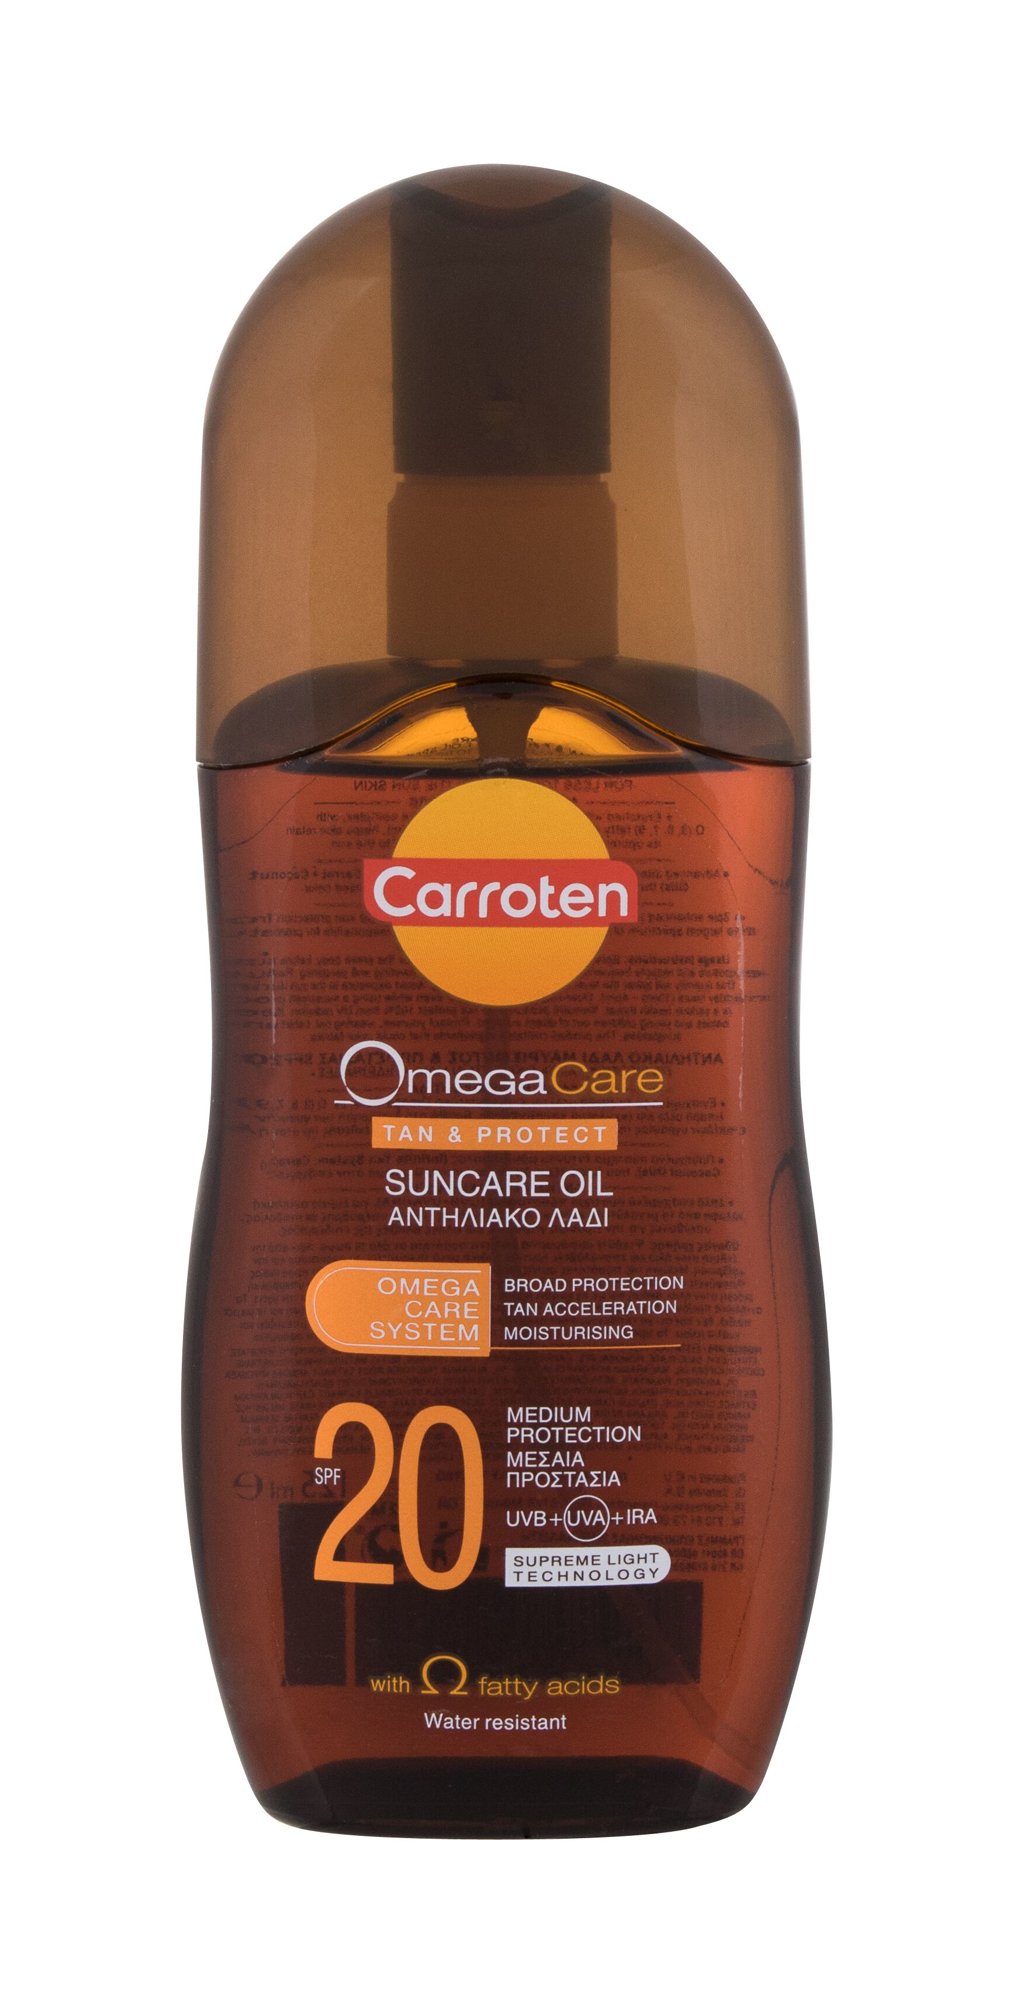 Carroten OmegaCare Suncare Oil 125ml įdegio losjonas